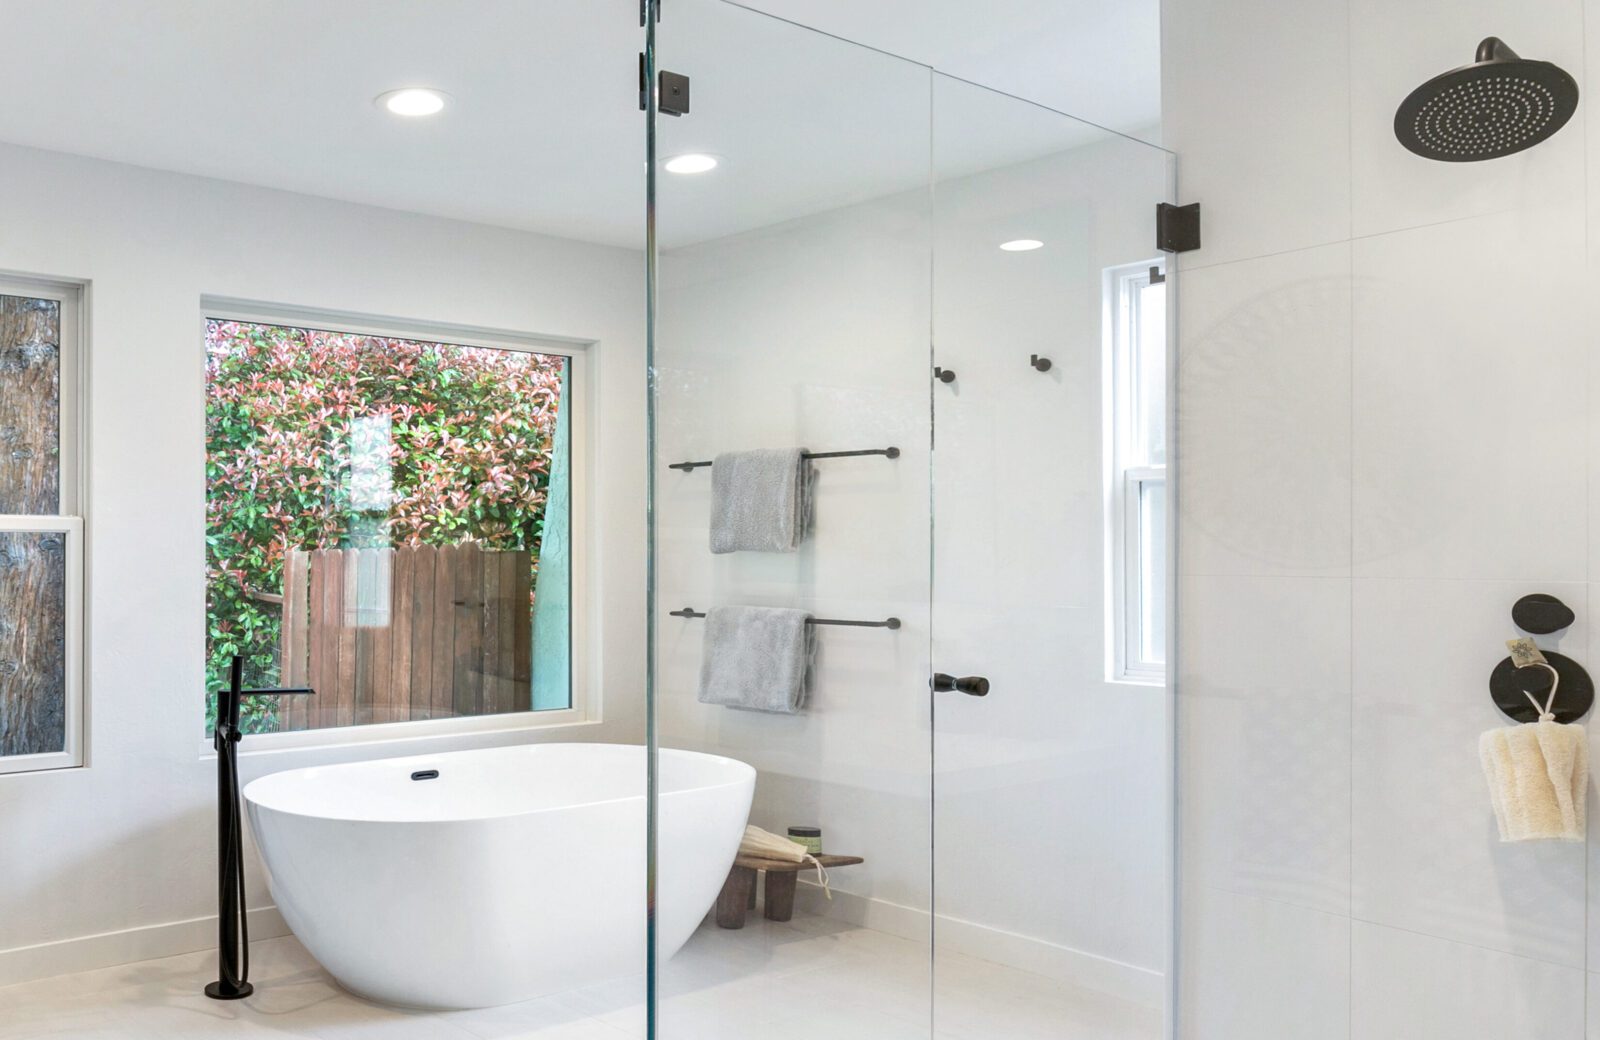 Primary Bathroom remodel, freestanding tub, tile floor, glass shower panel